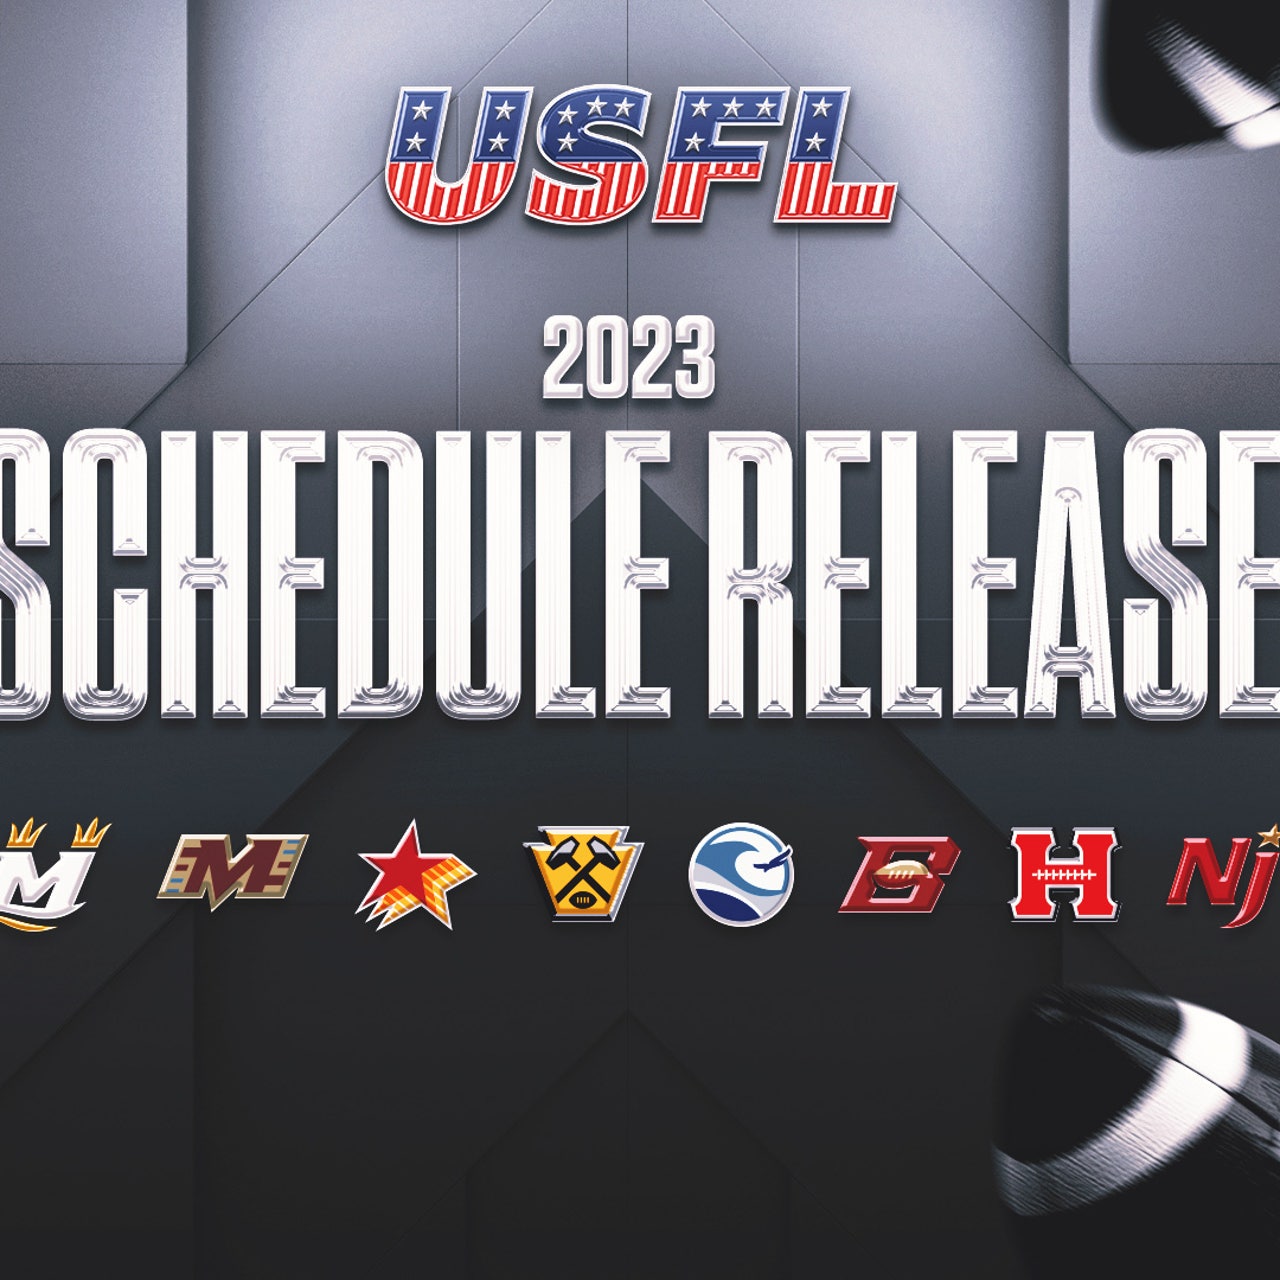 Tampa Bay Lightning 2023 Preseason Schedule: Dates, TV schedule